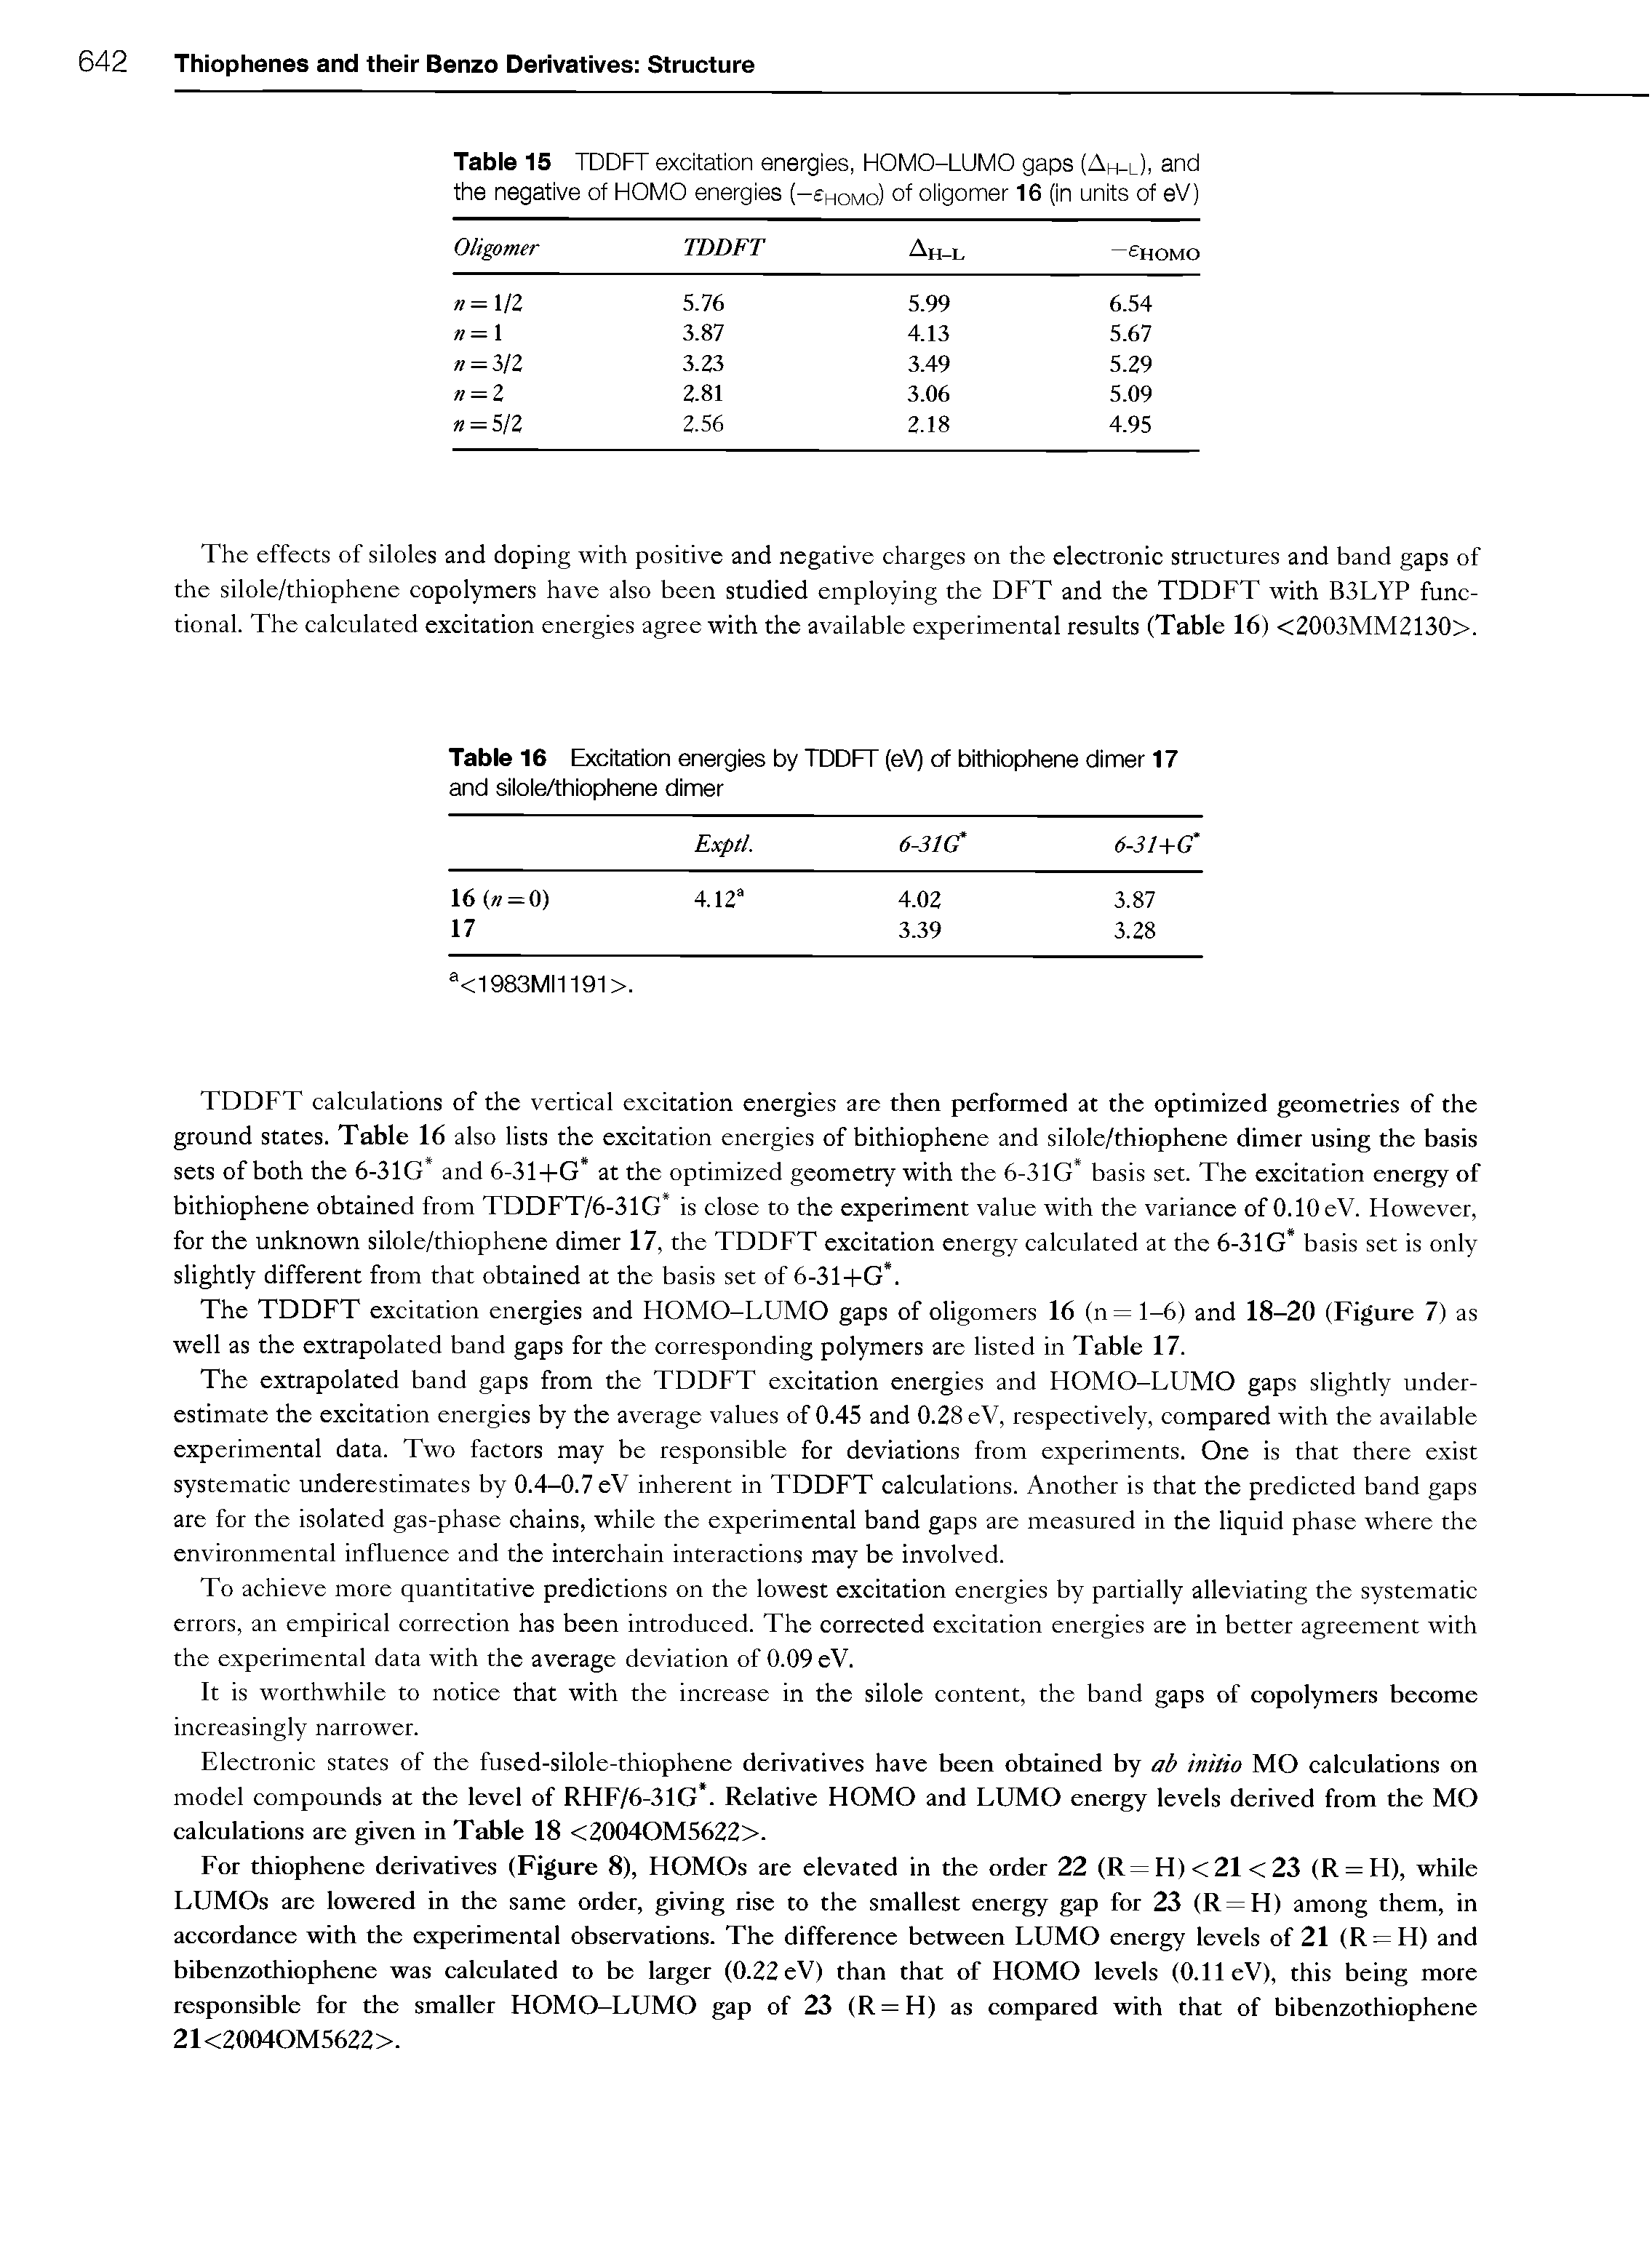 Table 15 TDDFT excitation energies, HOMO-LUMO gaps (Ah l), and the negative of HOMO energies (-shomo) of oiigomer 16 (in units of eV)...